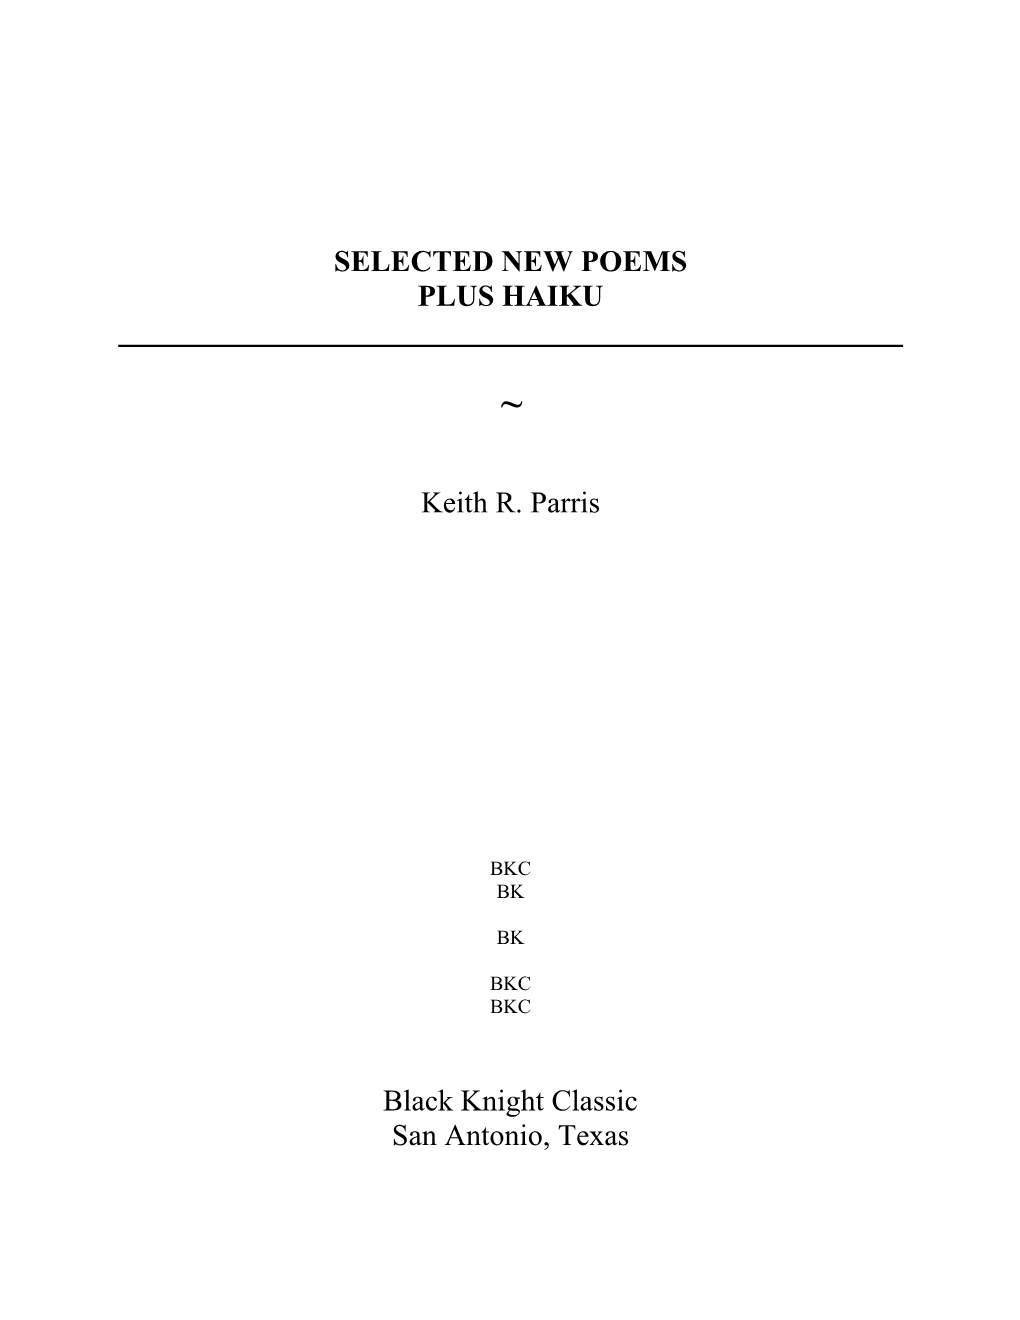 SELECTED NEW POEMS PLUS HAIKU Keith R. Parris Black Knight